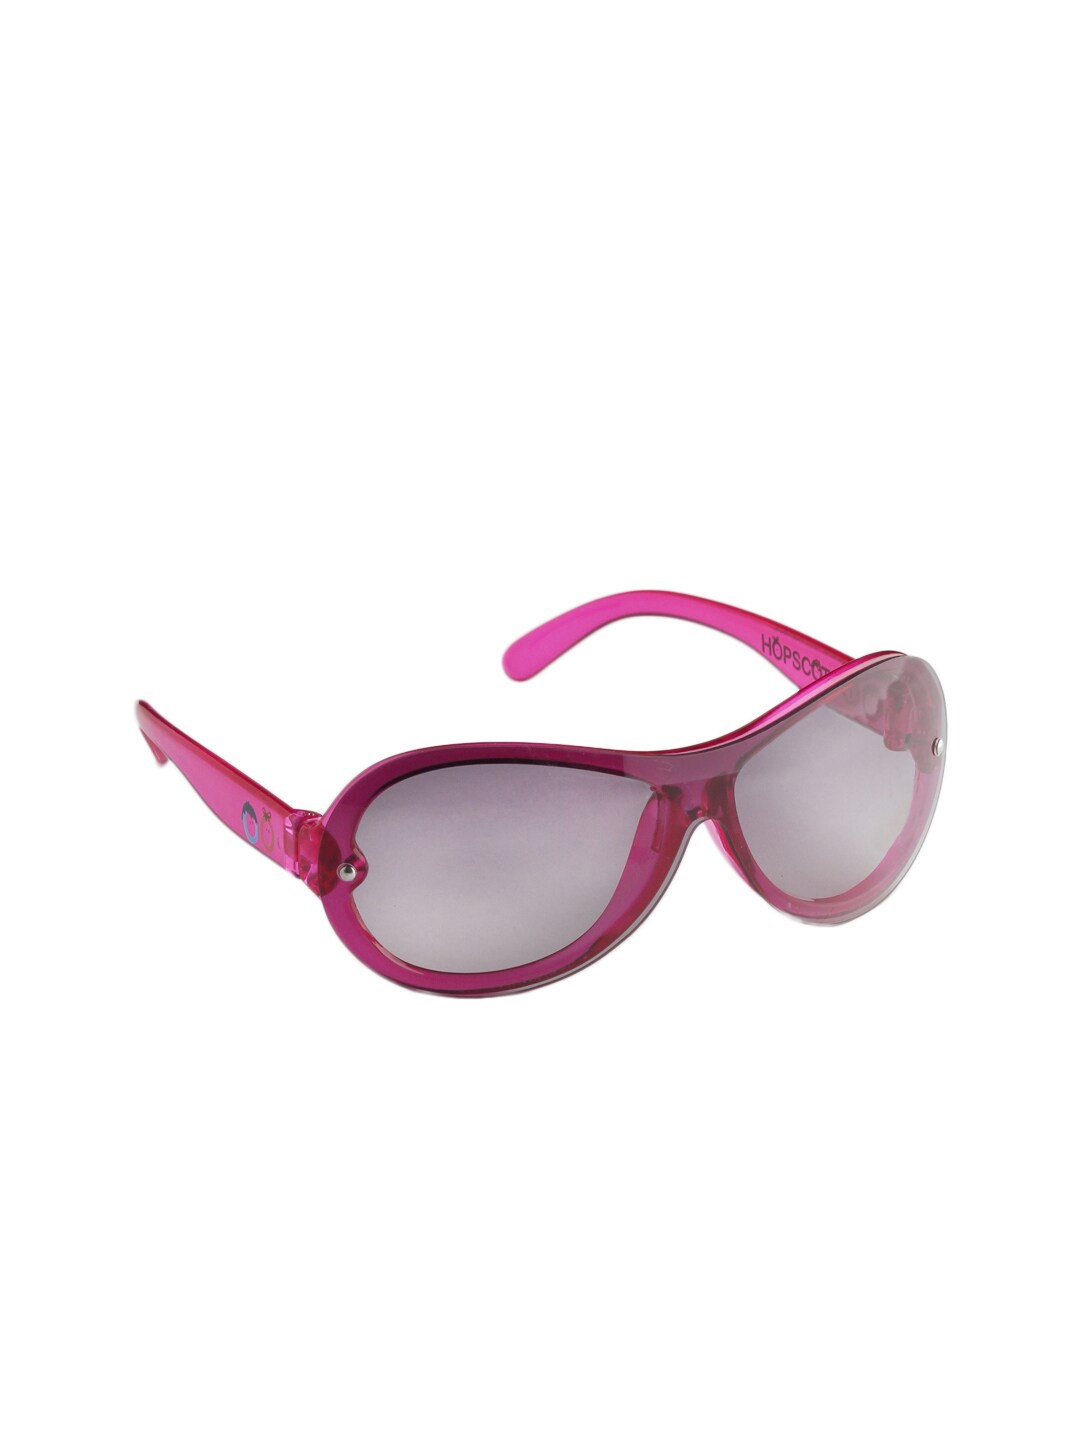 Hop Scotch Girls Pink Sunglasses